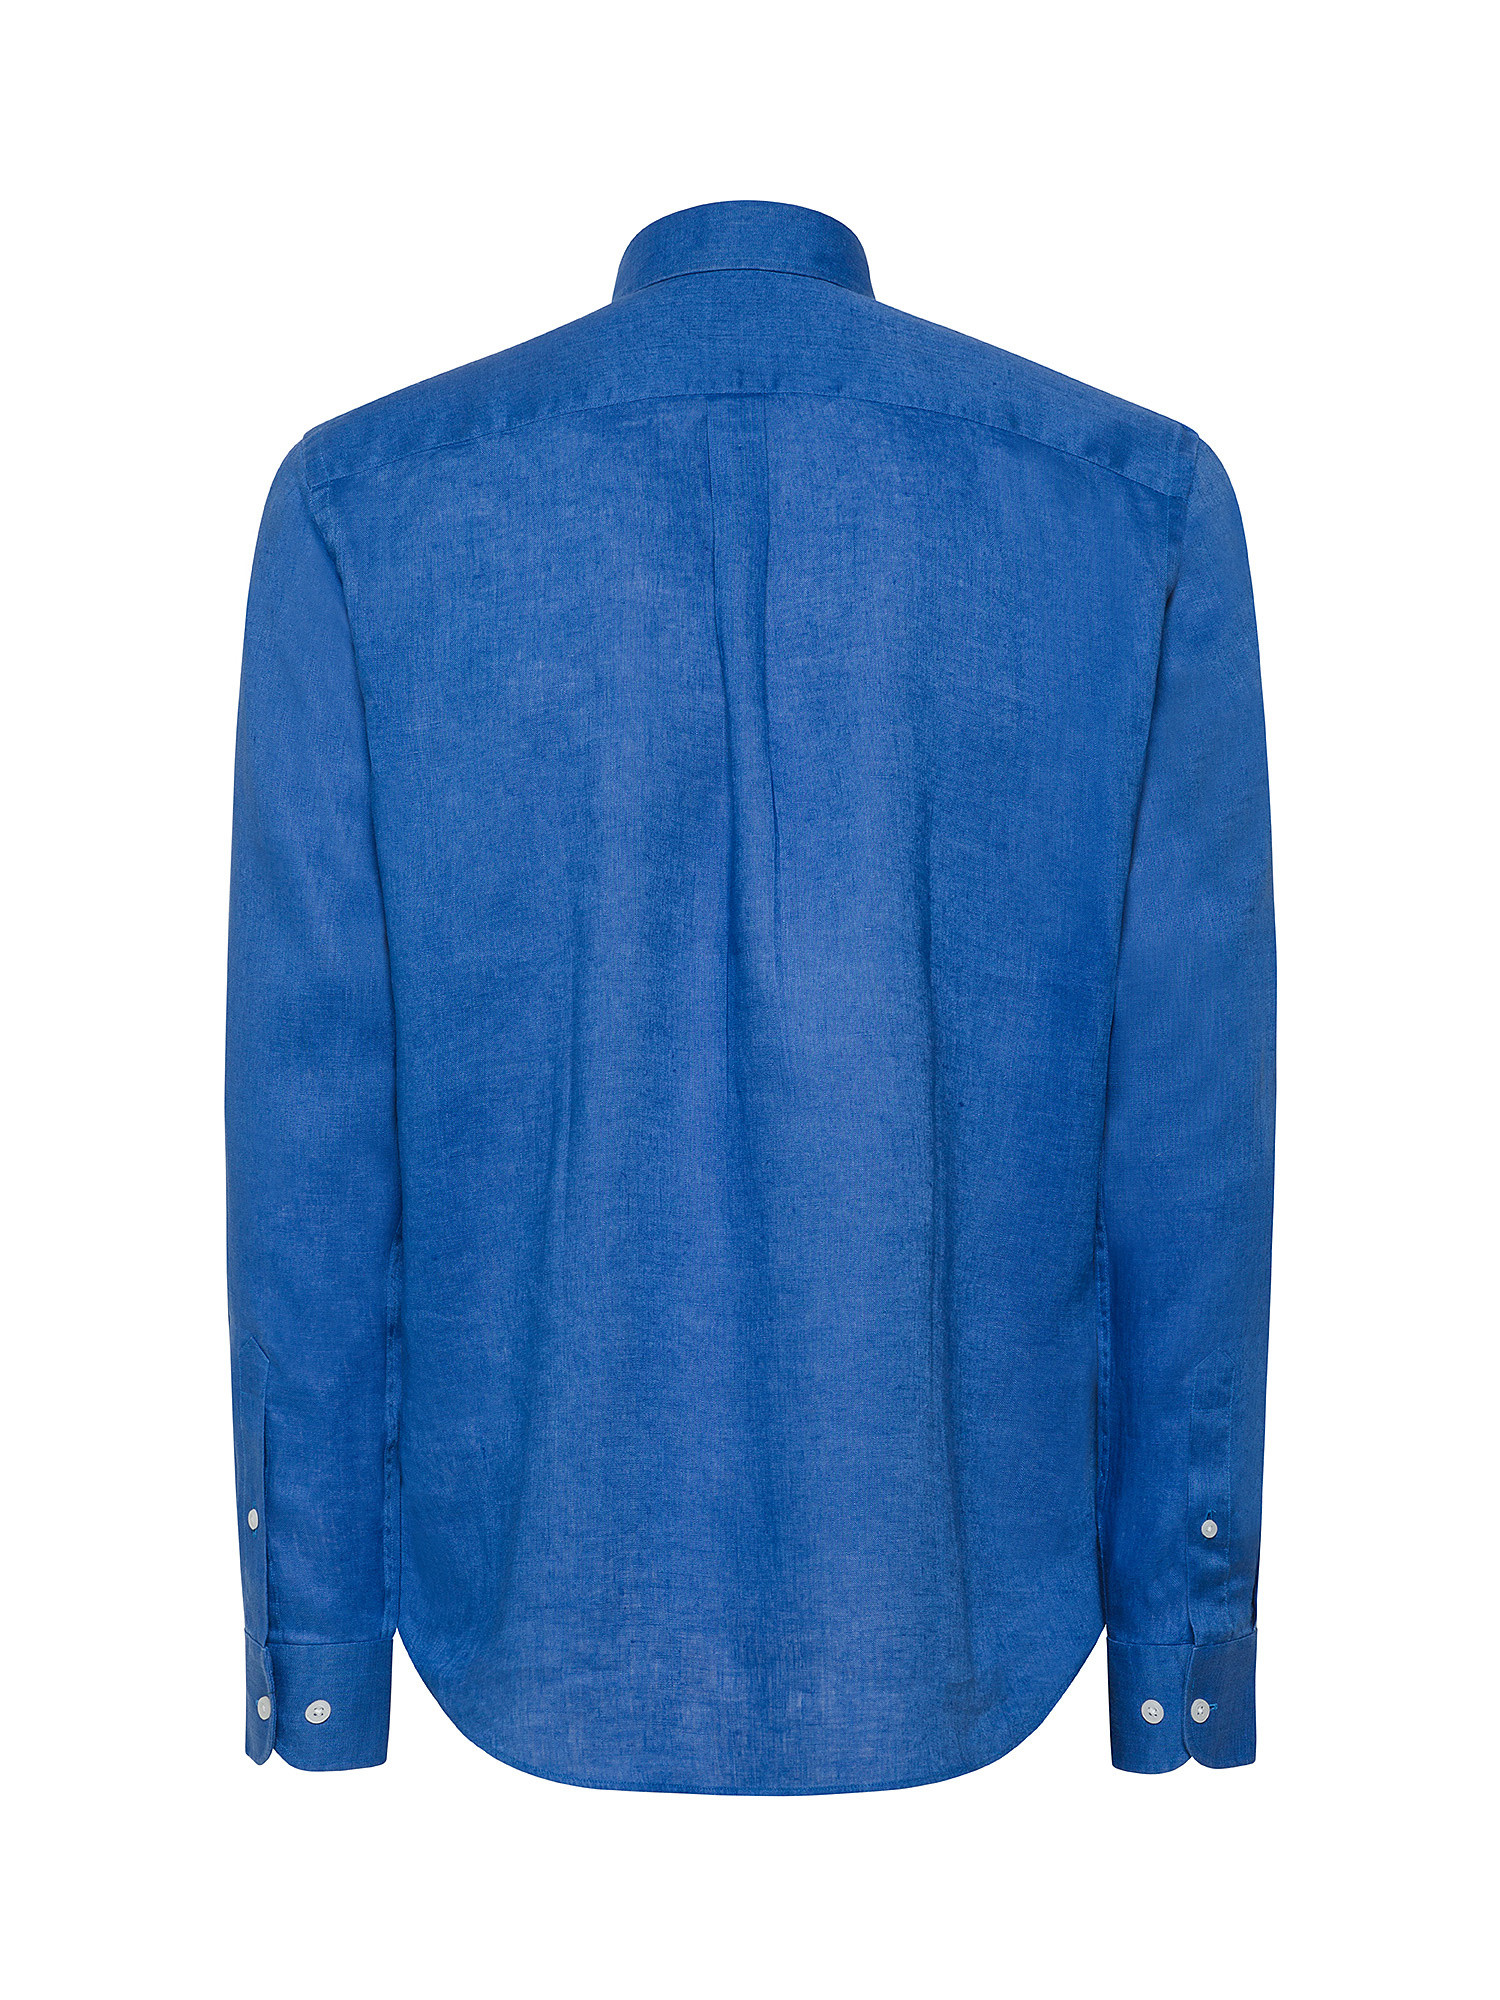 Luca D'Altieri - Camicia tailor fit in puro lino, Blu bluette, large image number 1